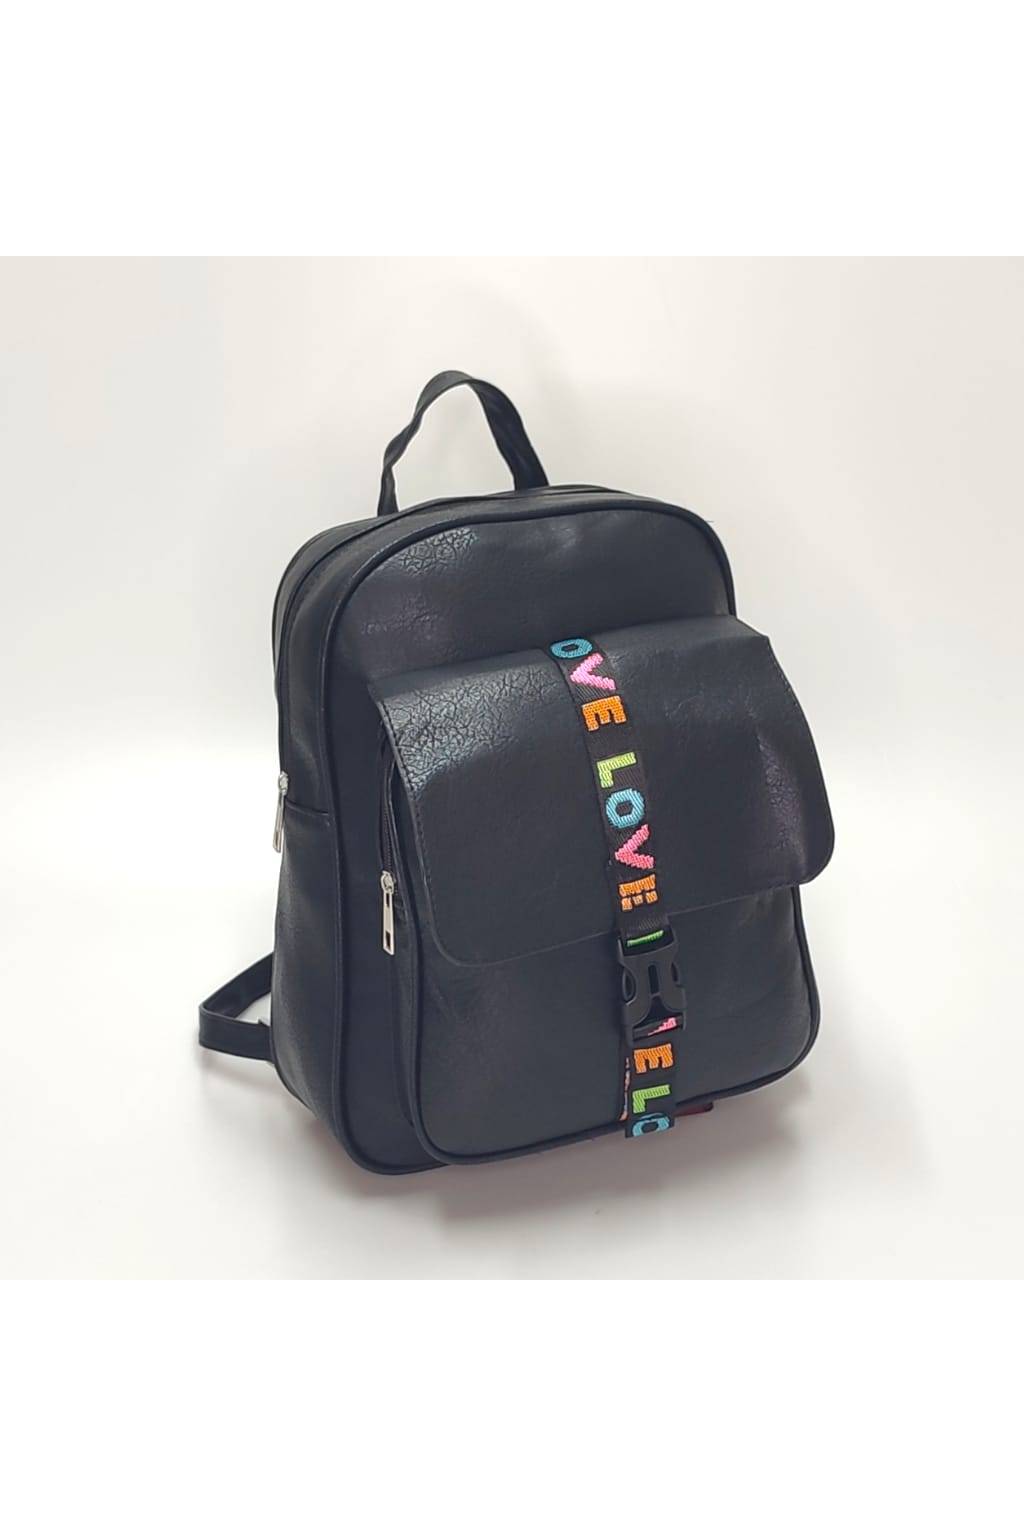 Dámsky ruksak DL0083 čierny www.kabelky vypredaj (2)